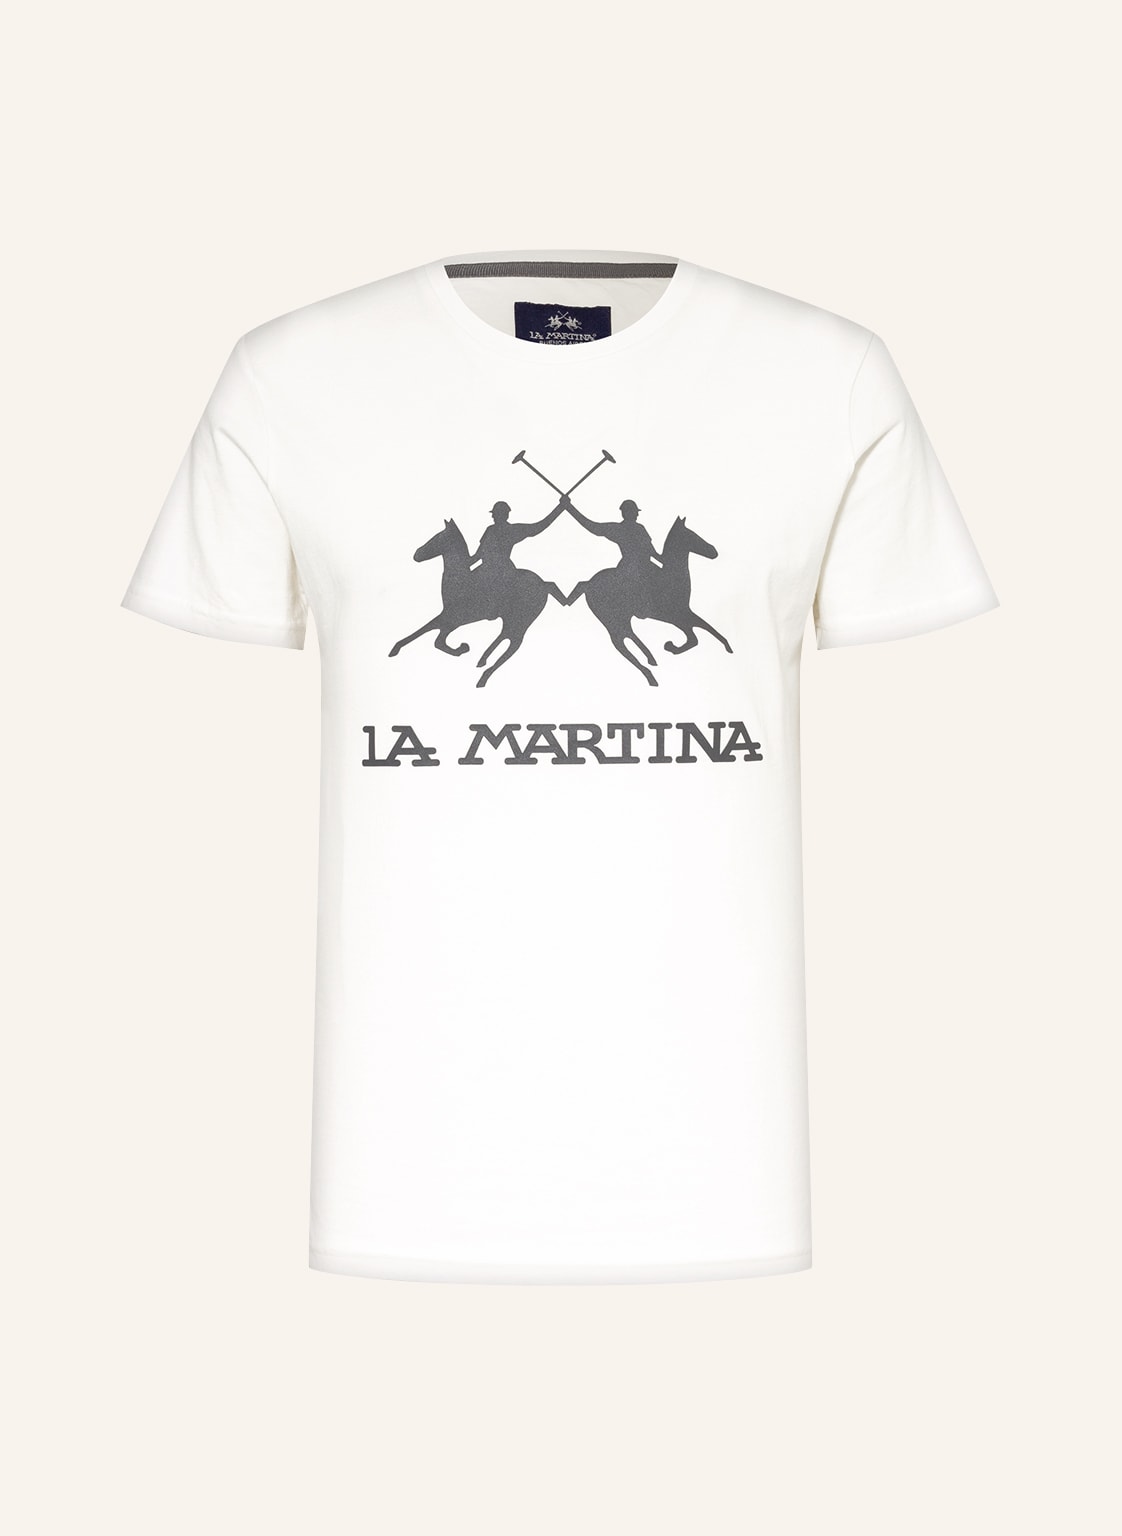 La Martina T-Shirt weiss von LA MARTINA